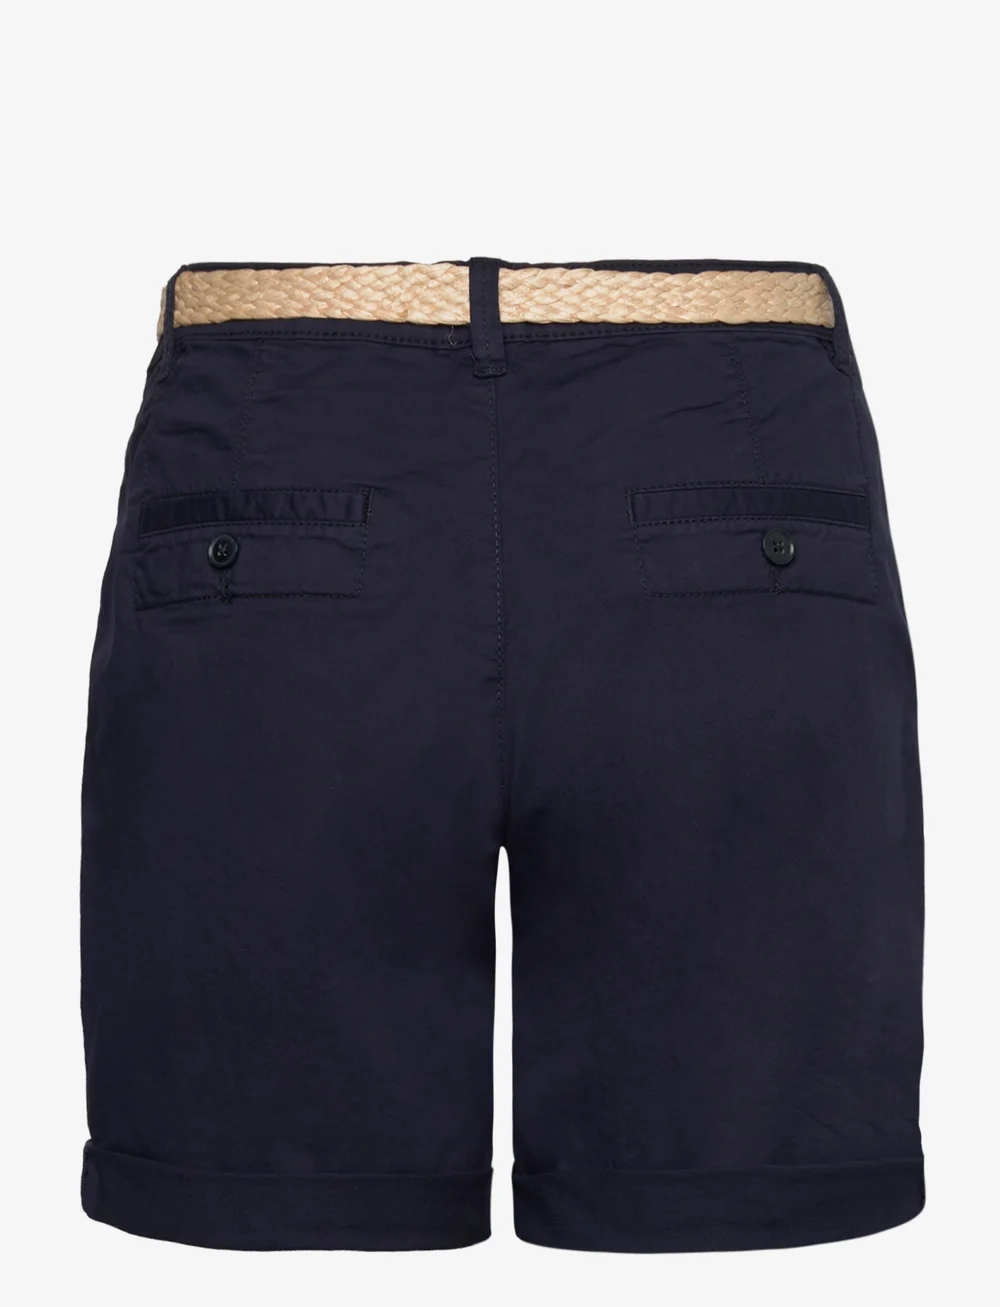 Esprit Casual Shorts With Braided Raffia Belt - Chino shorts